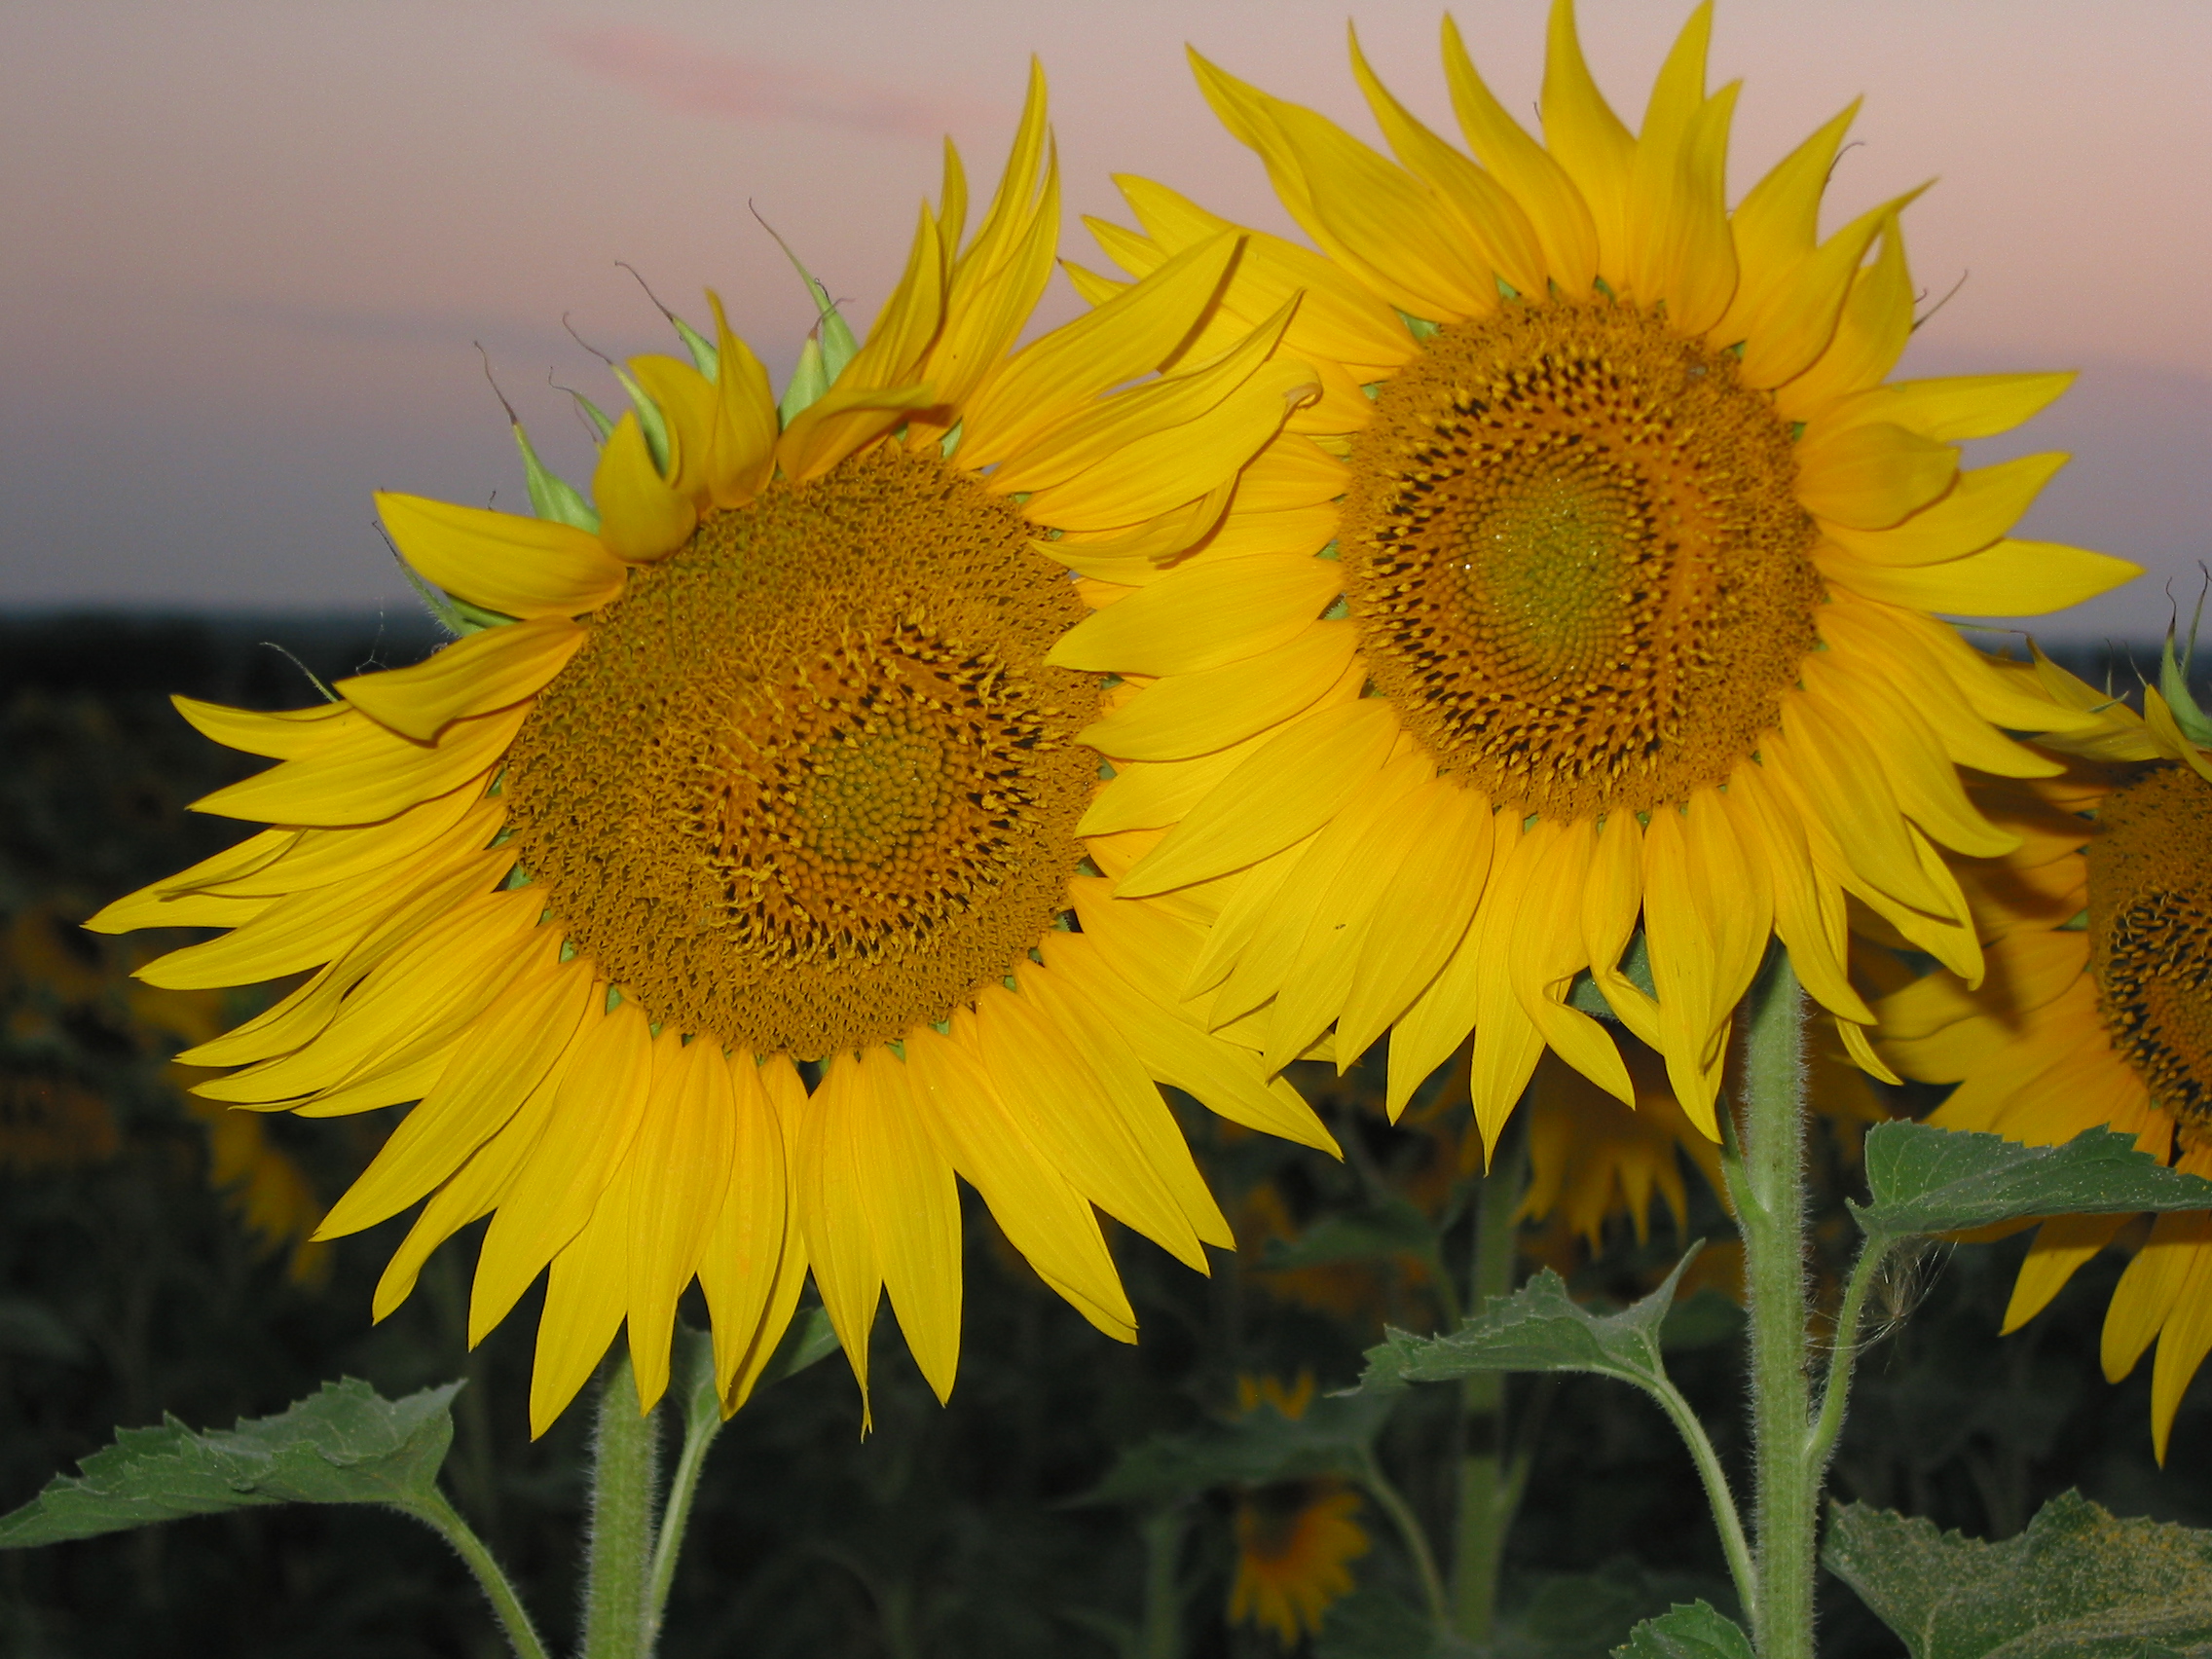 Sunflowers at dusk at Barrusclet farmhouse gite